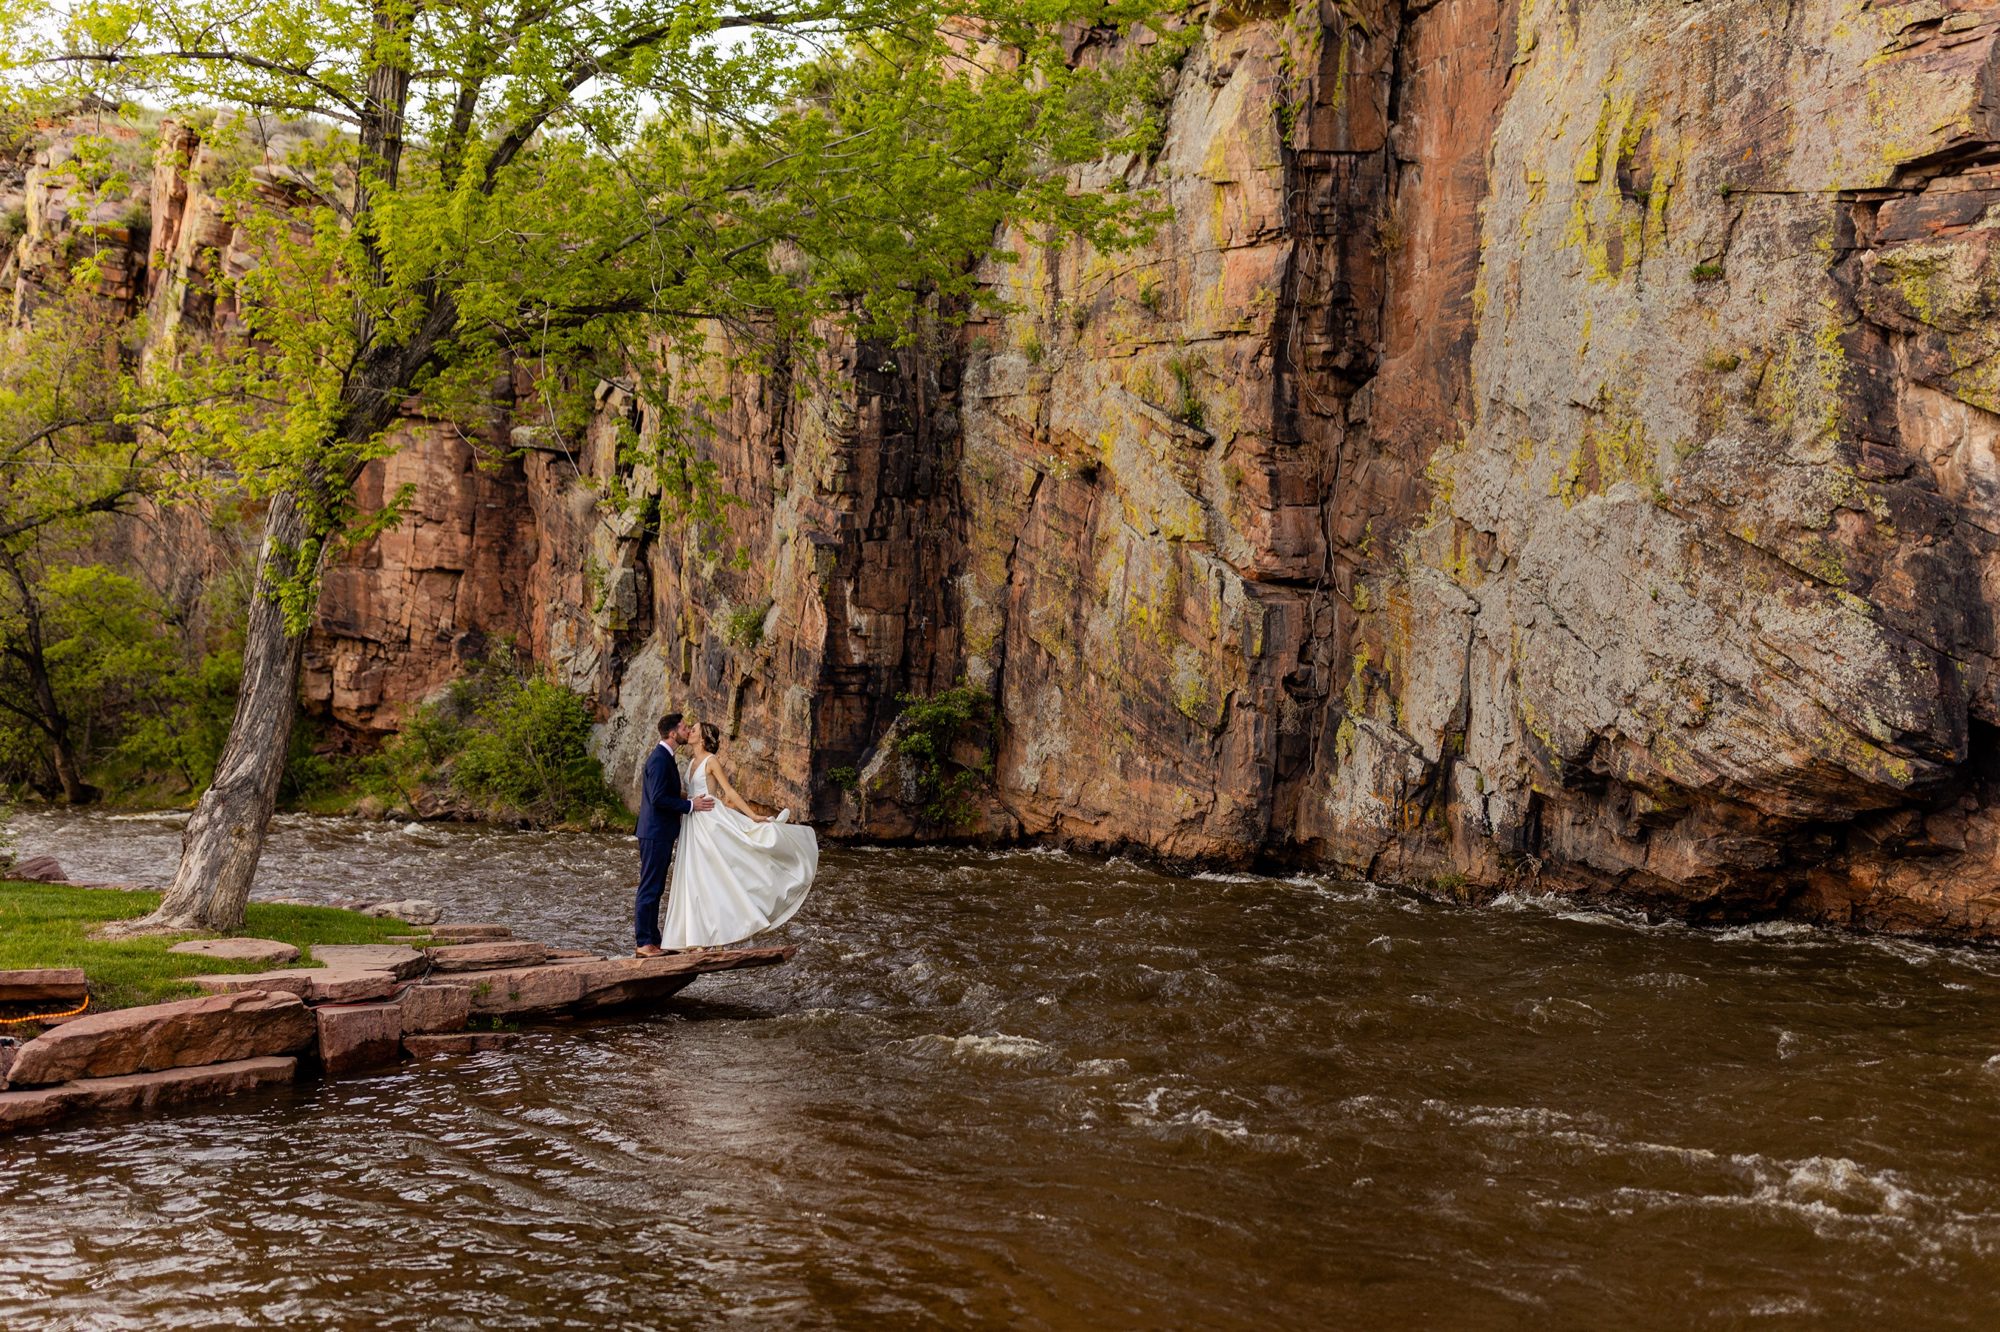 Planet Bluegrass Wedding venue in Lyons Colorado: Colorado Wedding Photographer, Sunset bride and groom photos